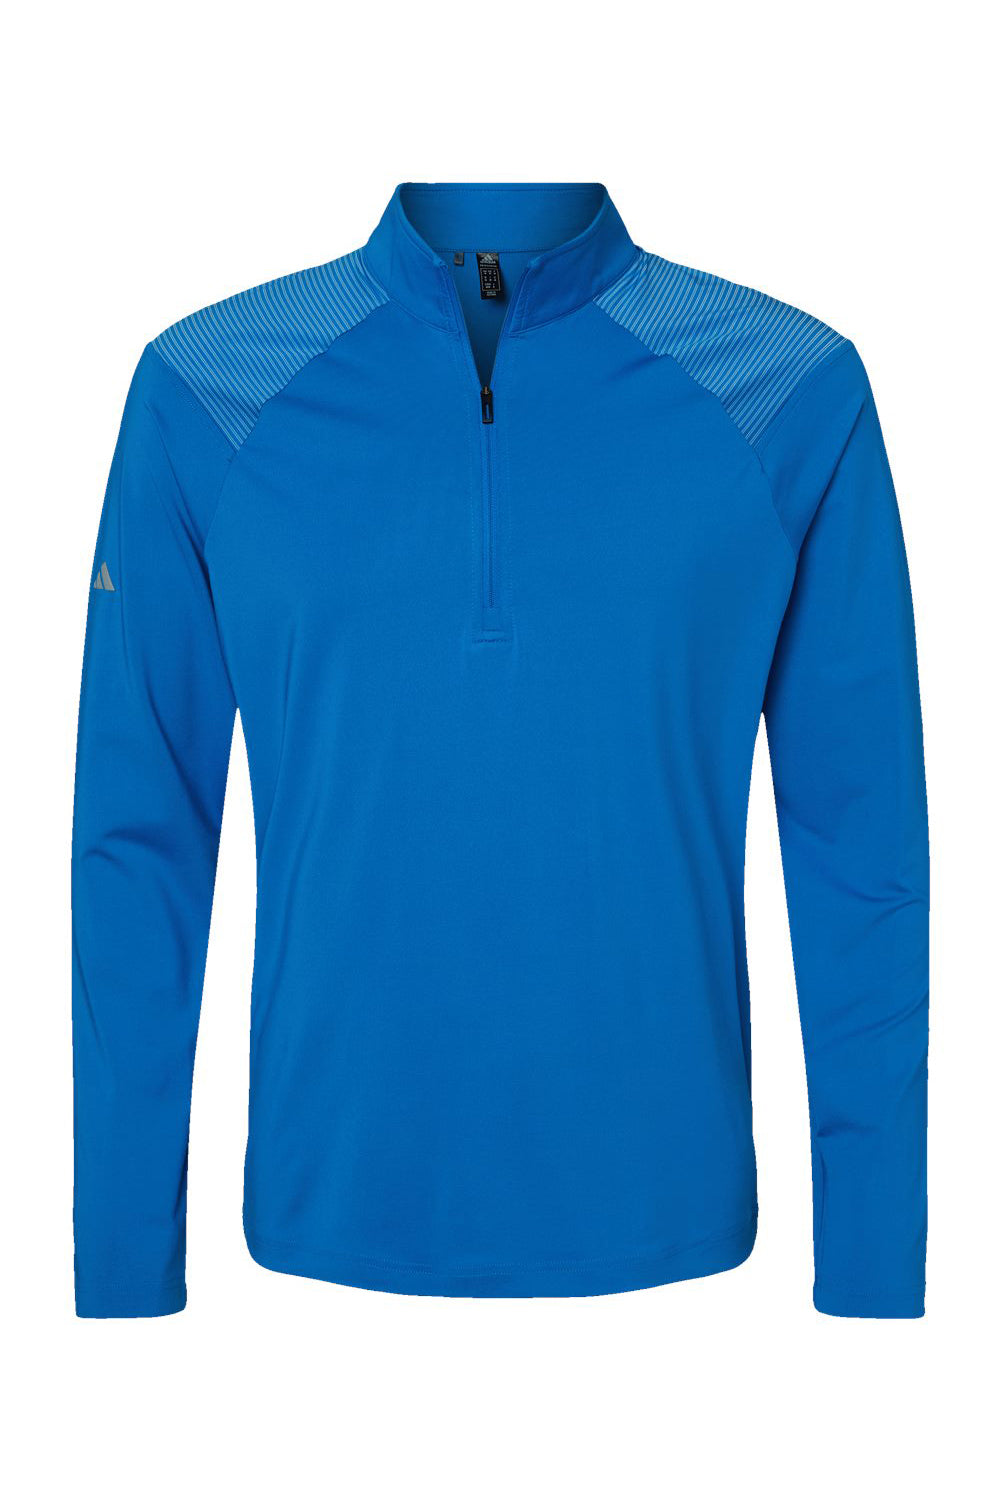 Adidas A520 Mens Shoulder Stripe Moisture Wicking 1/4 Zip Sweatshirt Glory Blue Flat Front